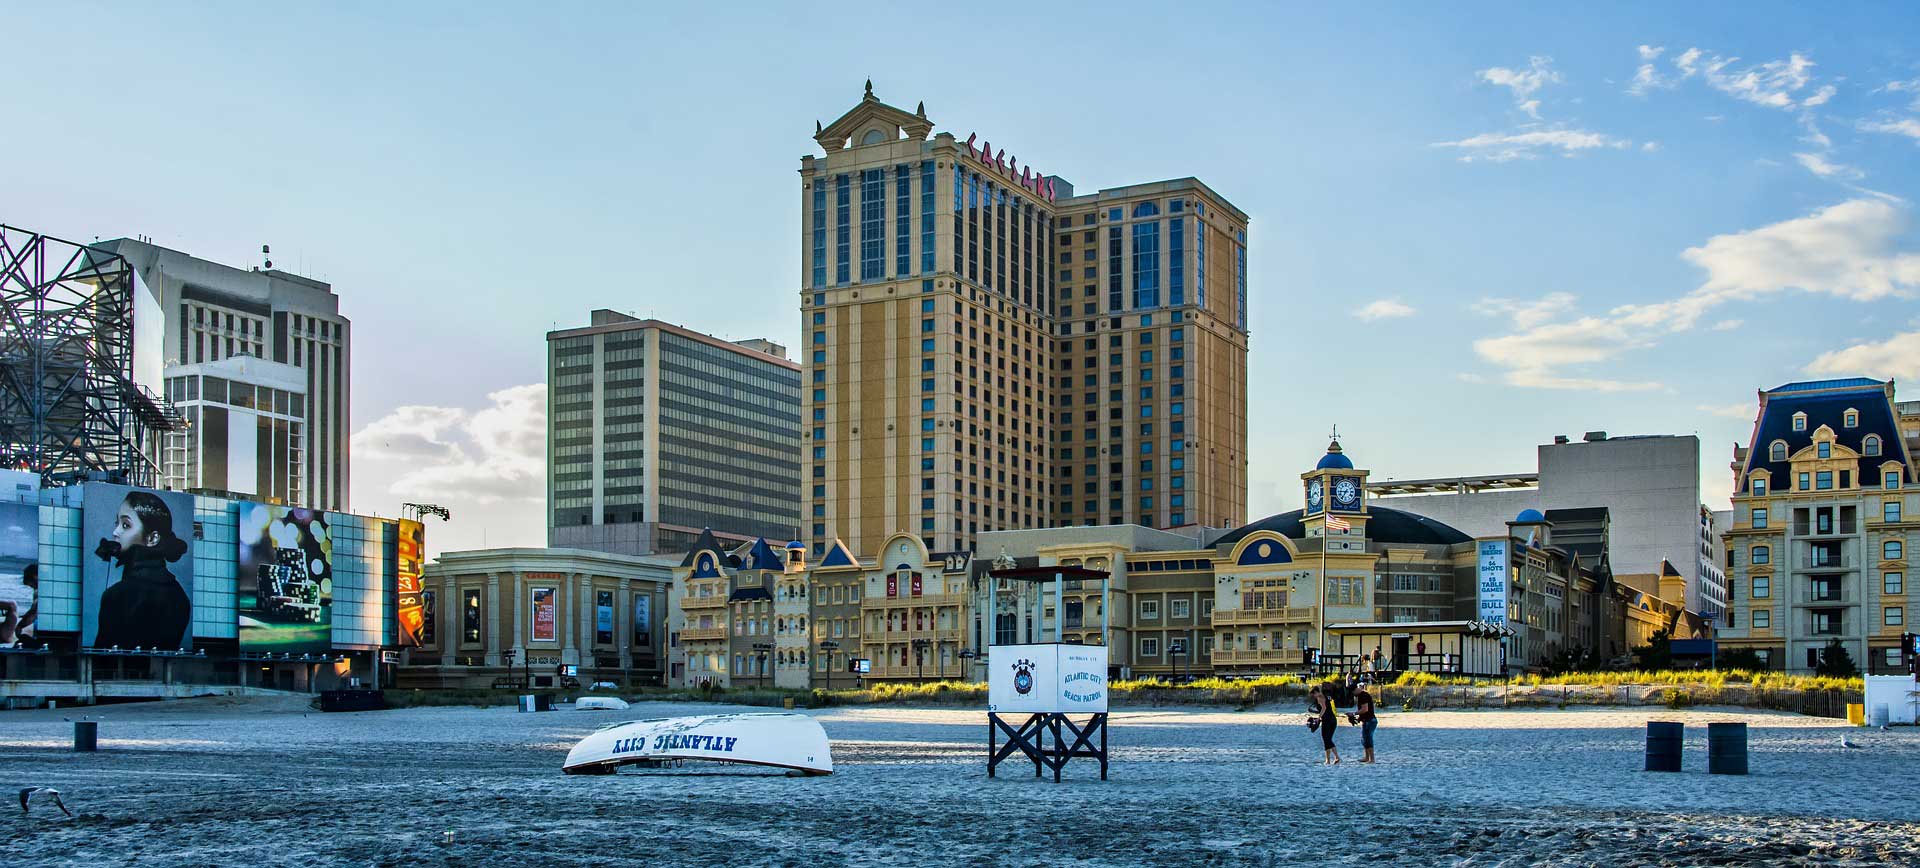 Atlantic City - Spiegelworld